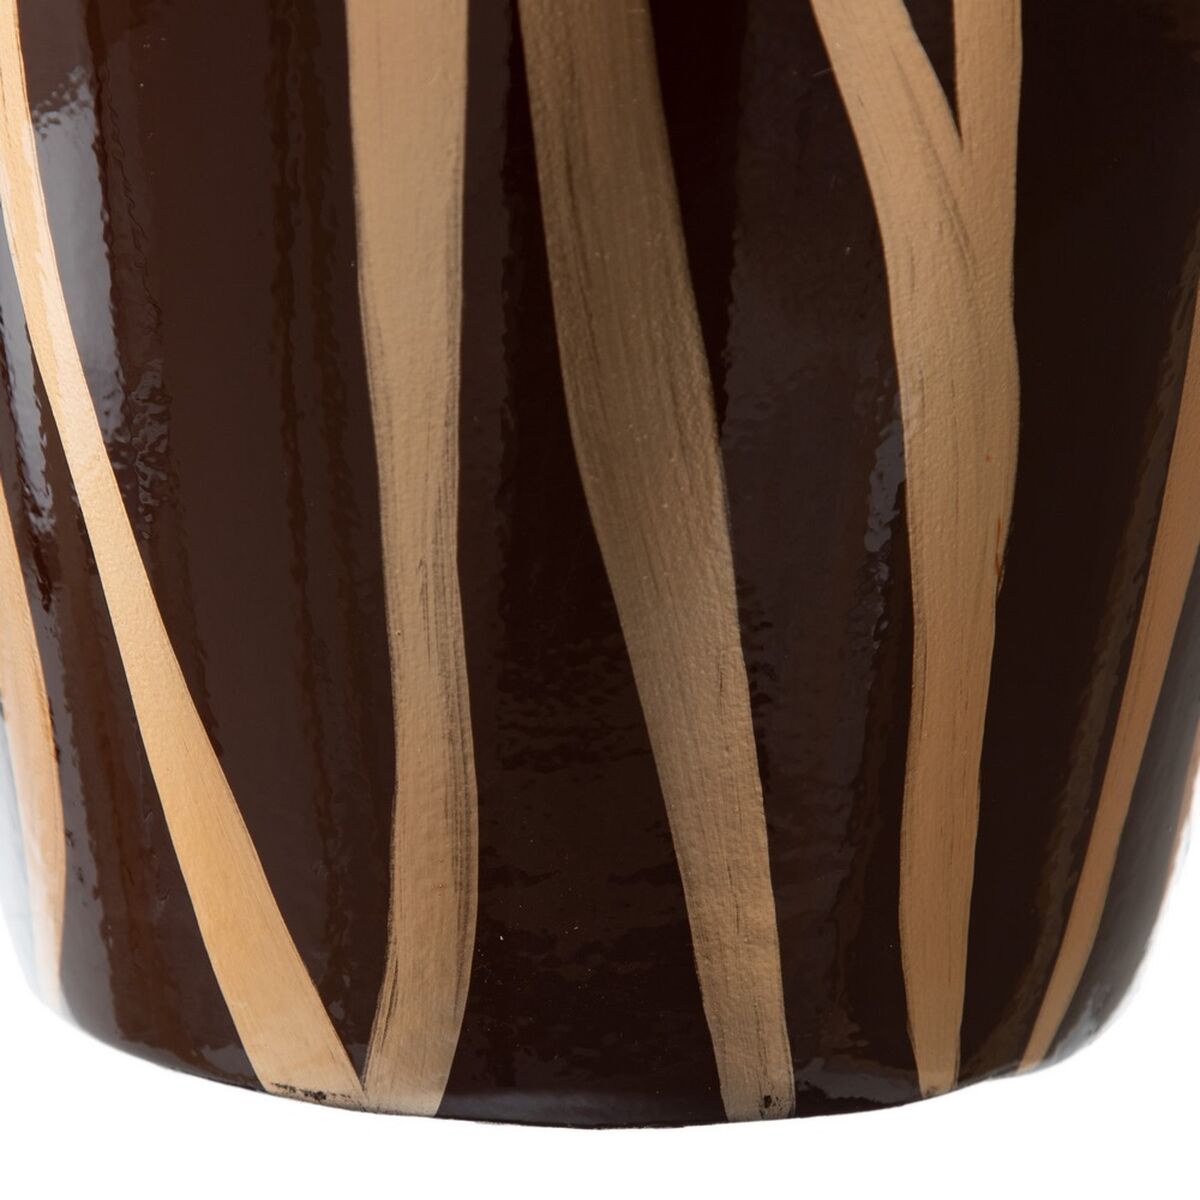 Vase 21 x 21 x 58,5 cm Zebra aus Keramik Gold Braun